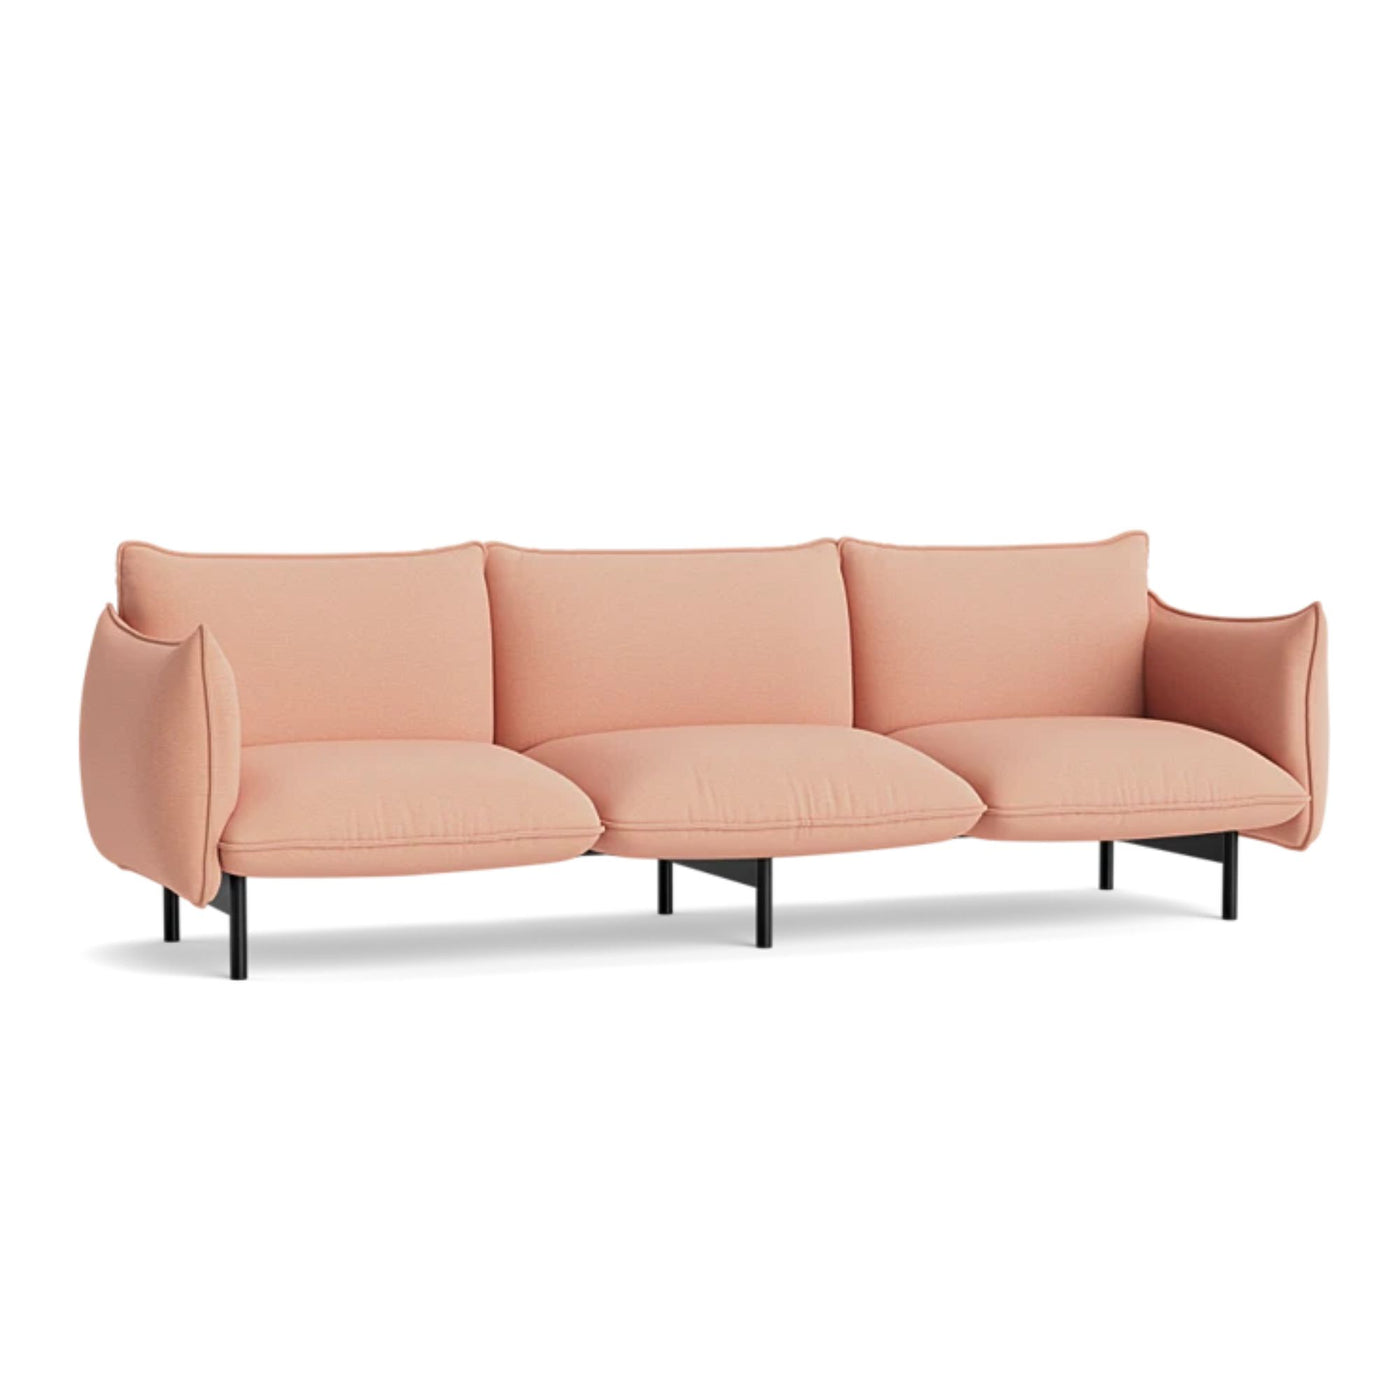 Normann Copenhagen Ark 3 Seater Modular Sofa at someday designs. #colour_steelcut-trio-515